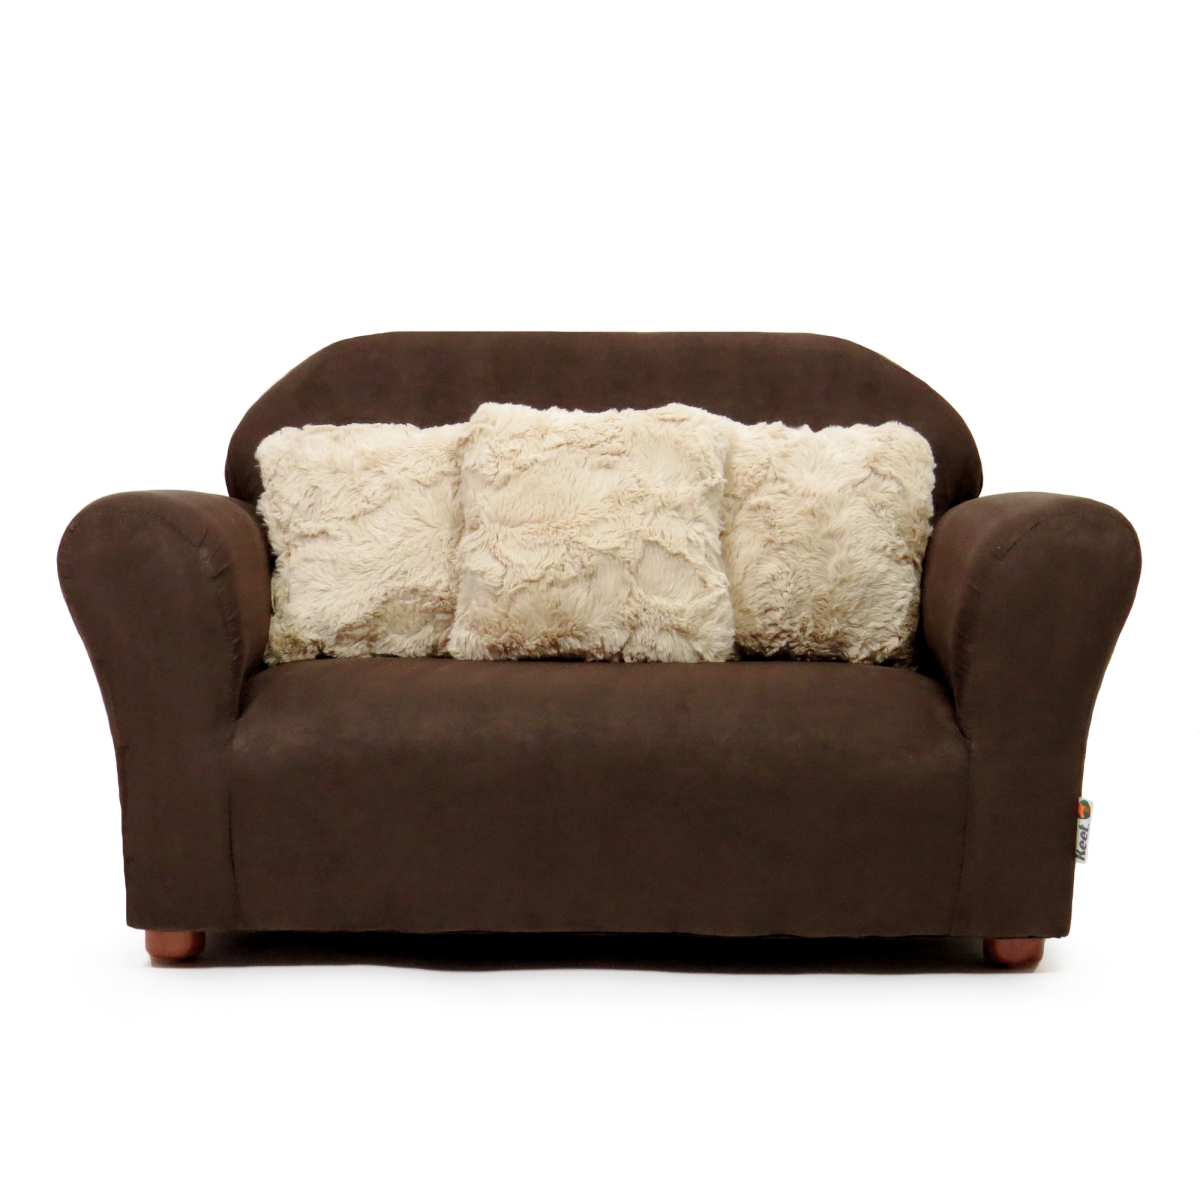 Keet SR081 Plush Childrens Sofa with Khaki Accent Pillows, Brown - 32 x 18 x 18 x in.